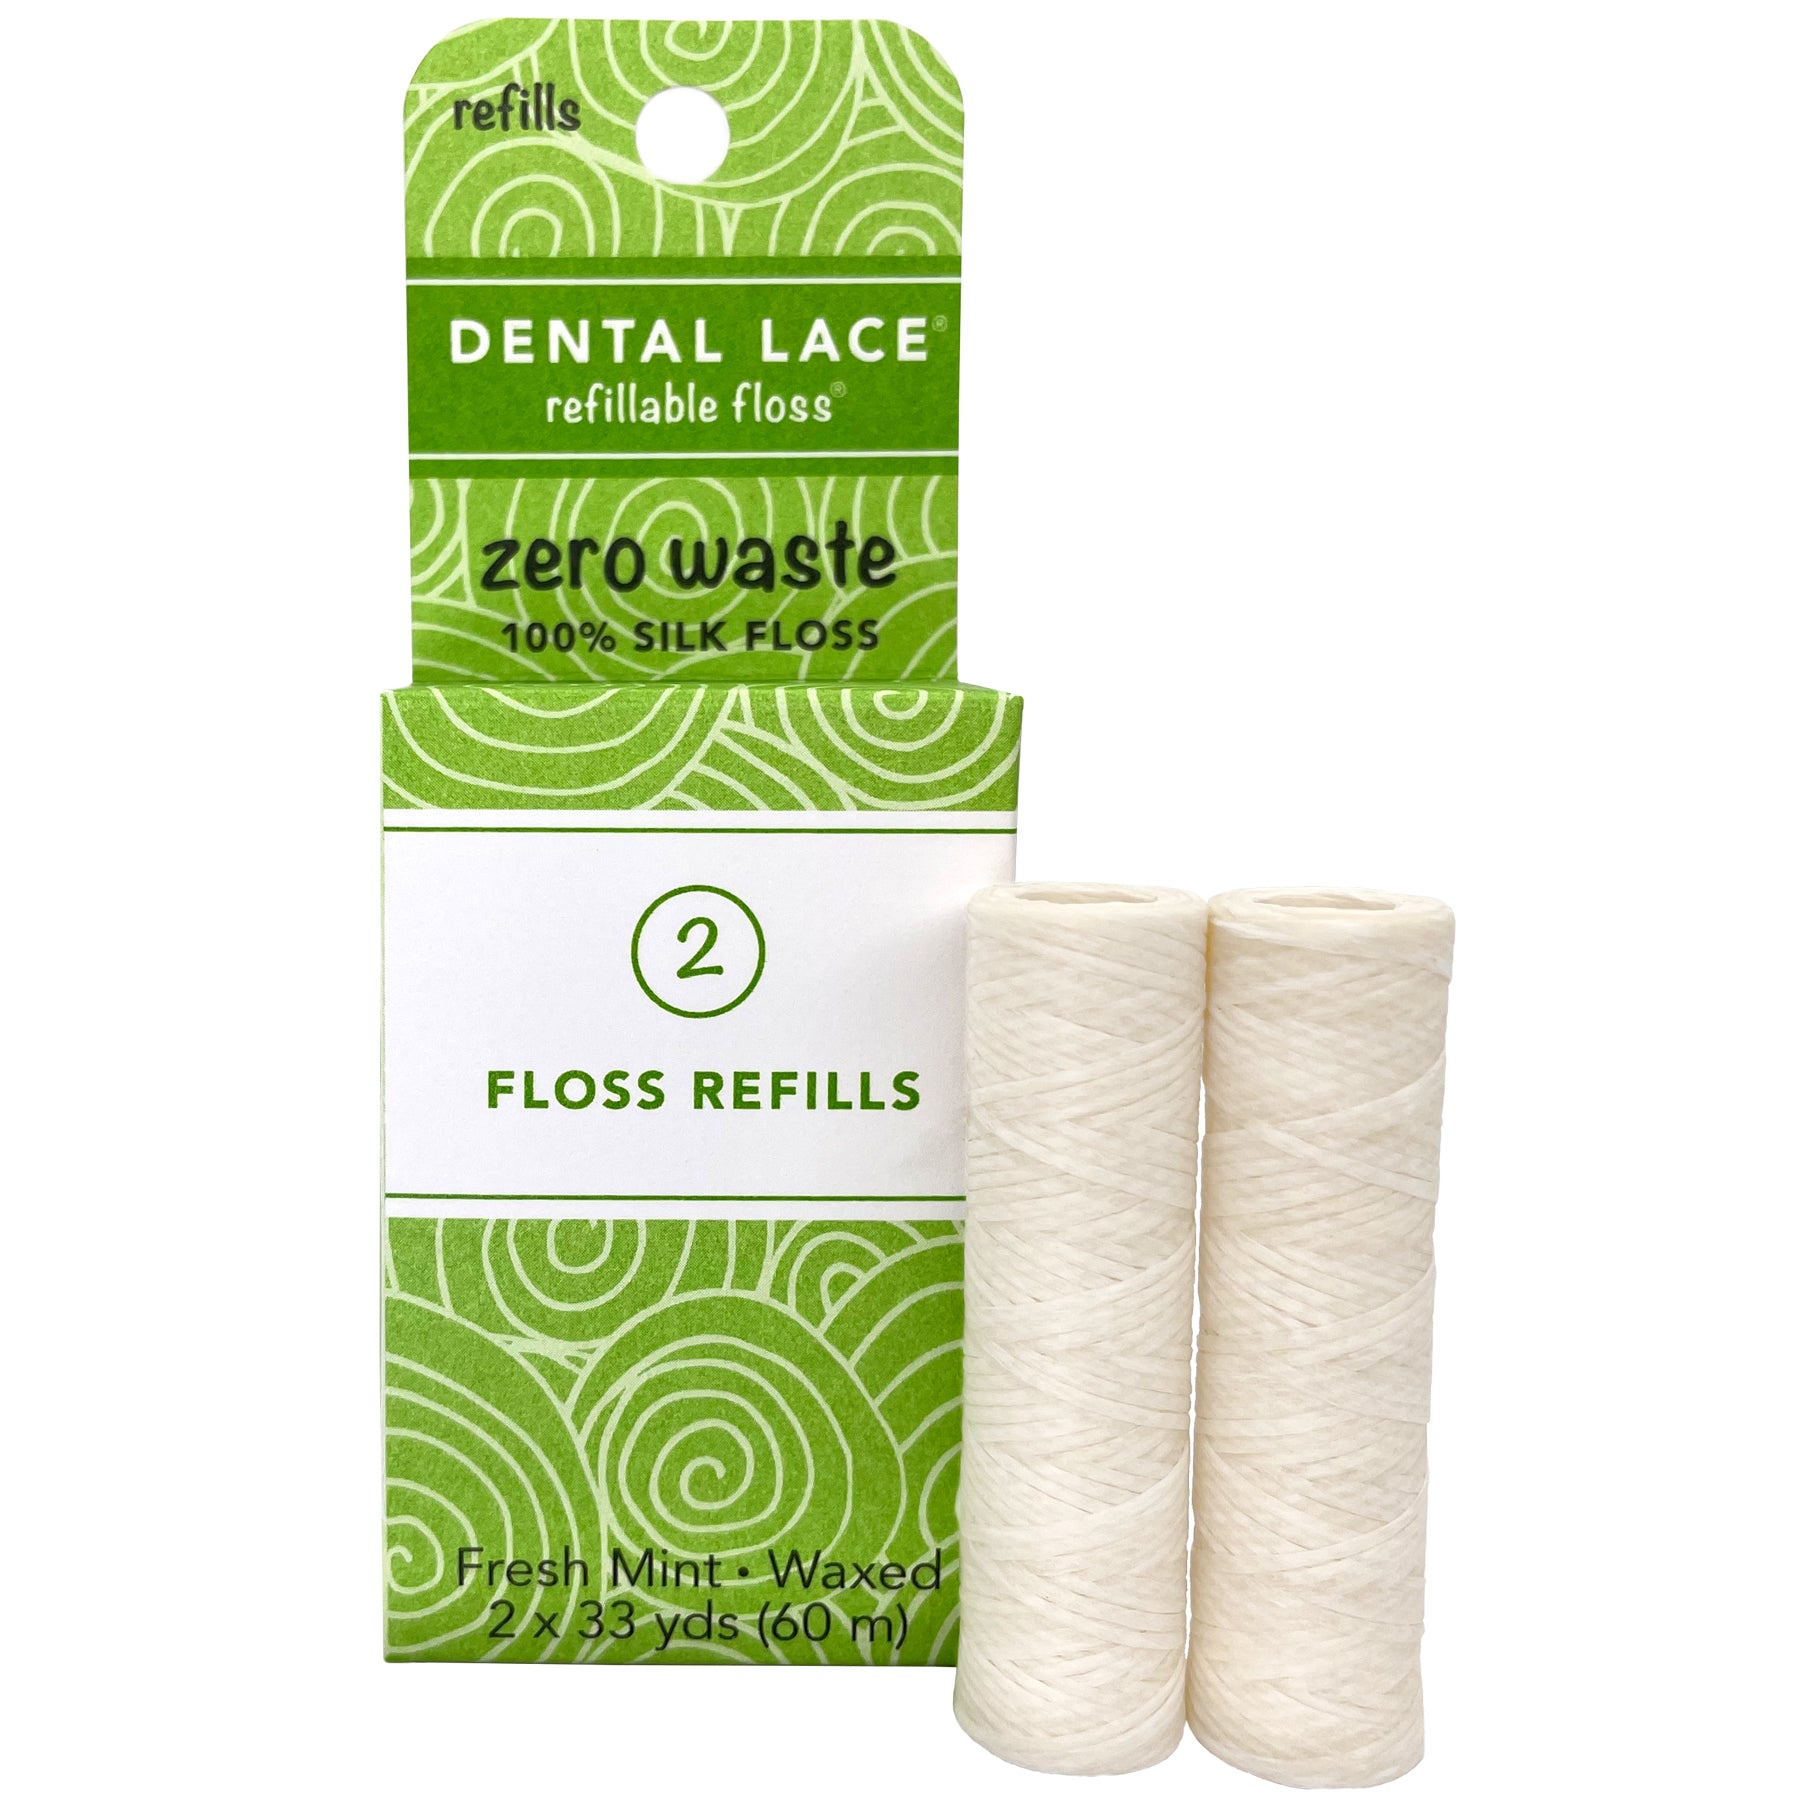 Tidligere Original patrulje Zero Waste Silk Floss Refills - 2 Month Supply | Dental Lace